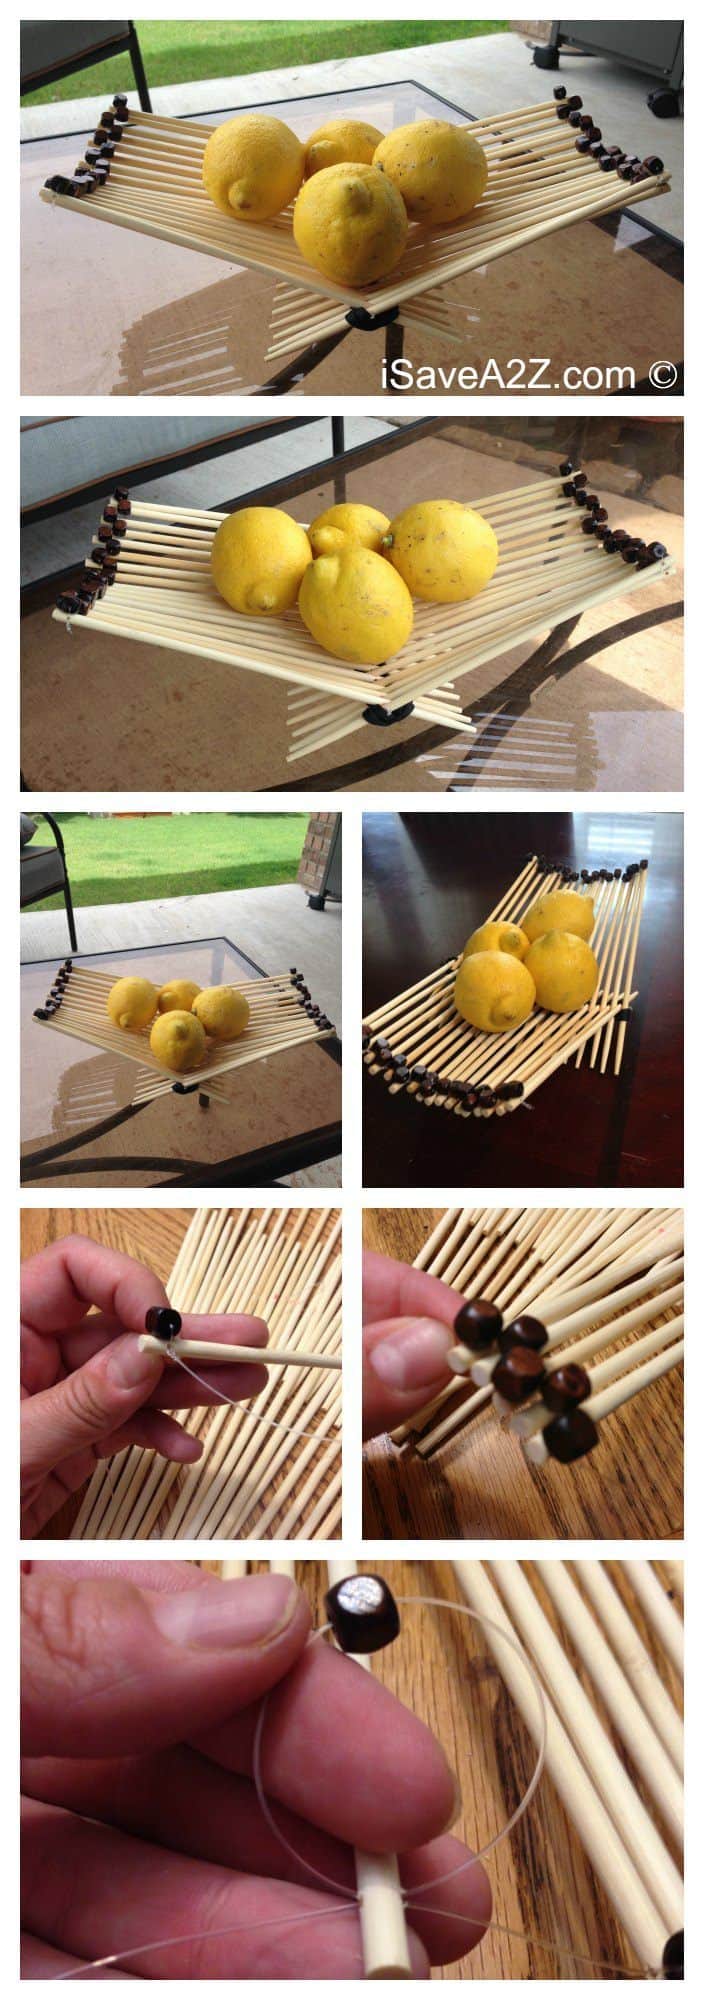 How to Make a Chopsticks Basket with a decorative edge